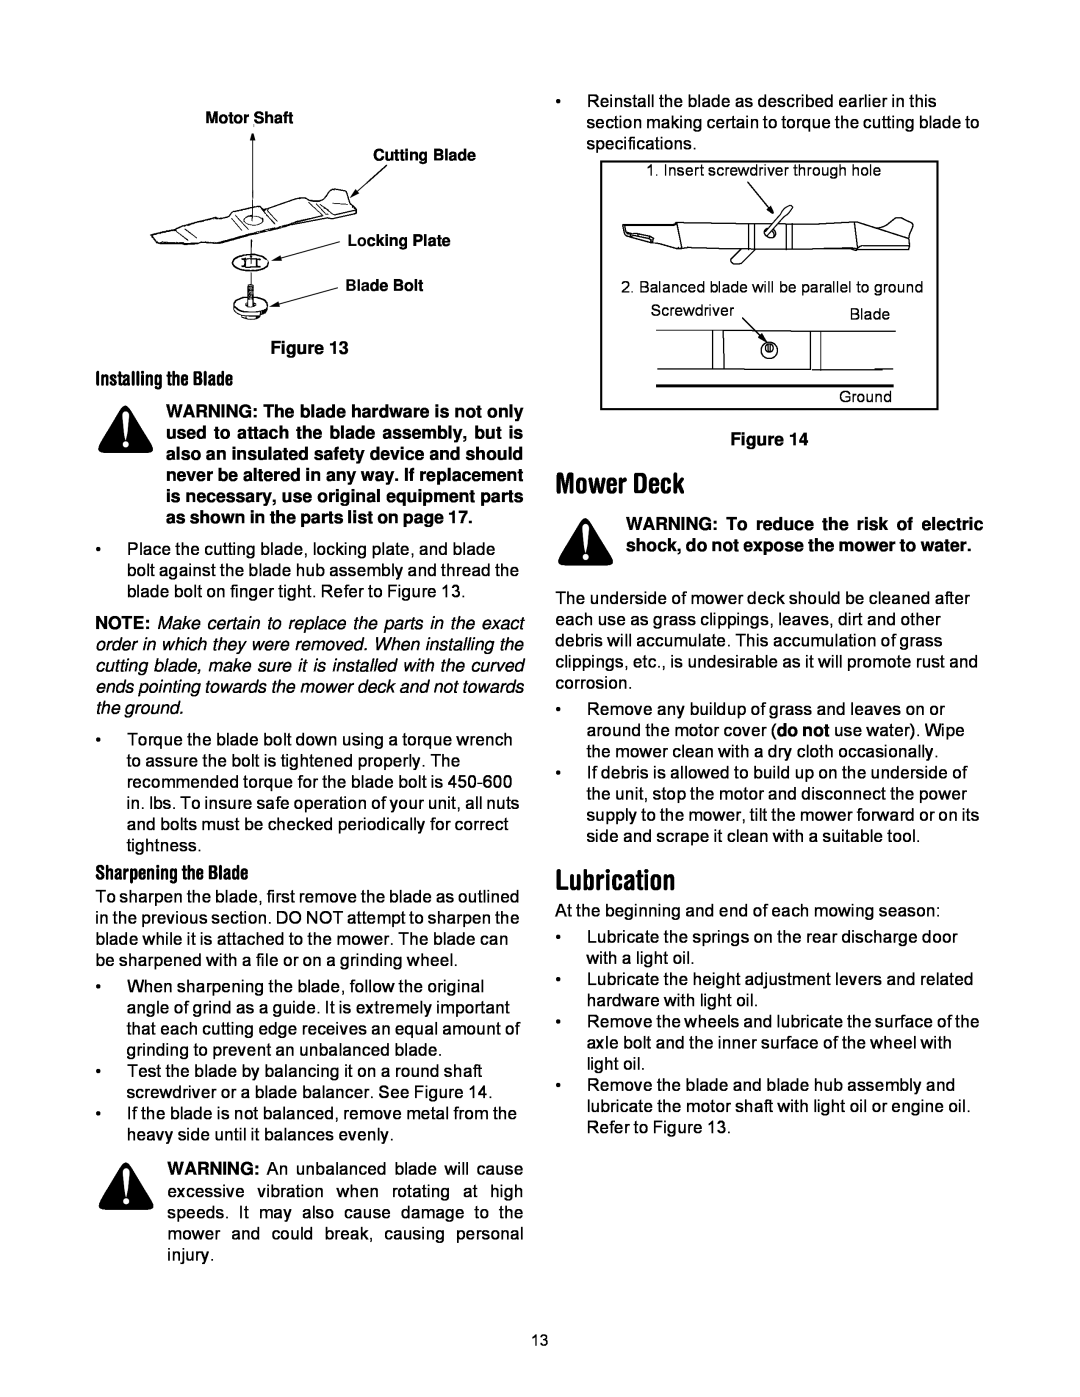 MTD 769-01445 manual Mower Deck, Lubrication, Installing the Blade, Sharpening the Blade 